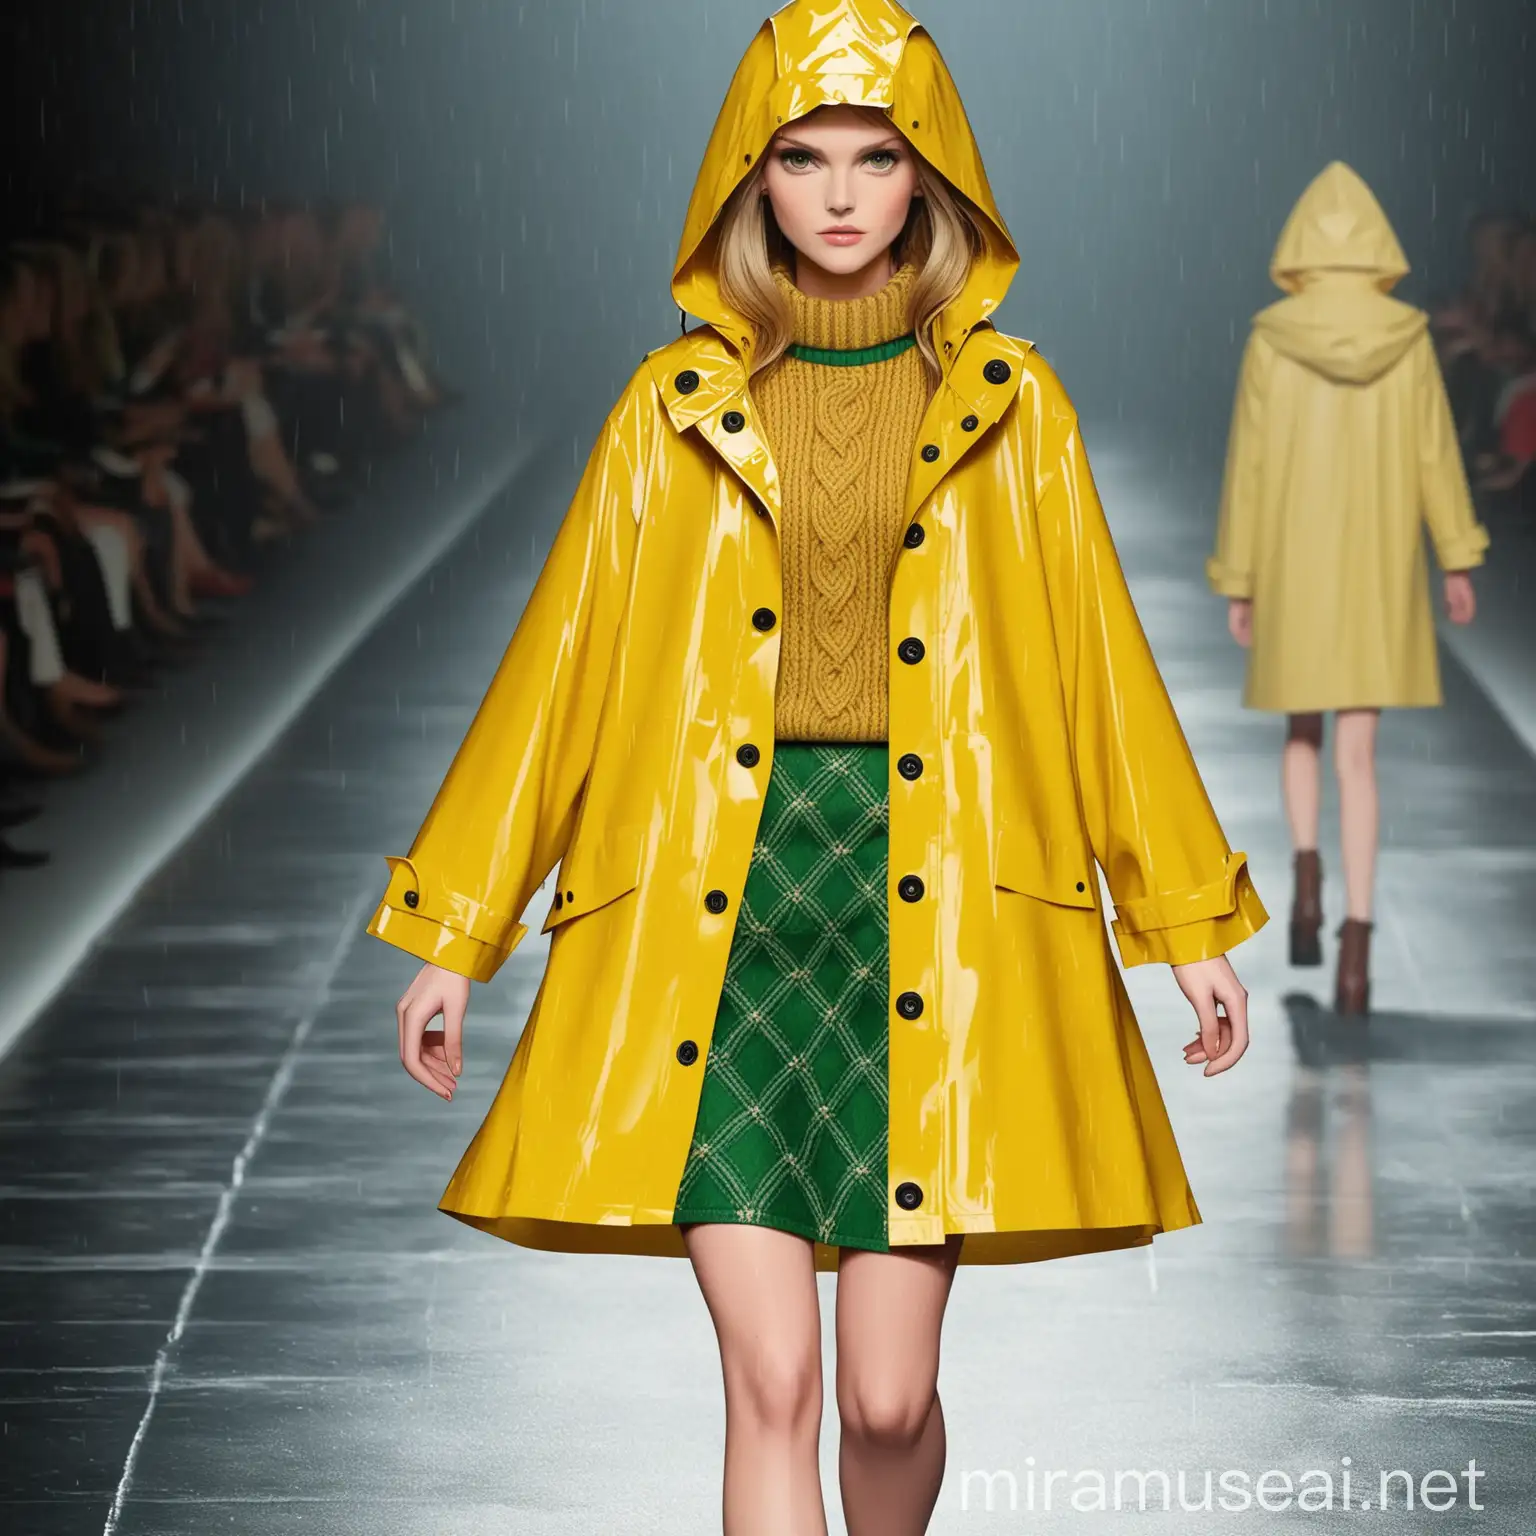 Fashion Runway Stylish Yellow Raincoat with Irish Fishermans Sweater and Skirt Ensemble